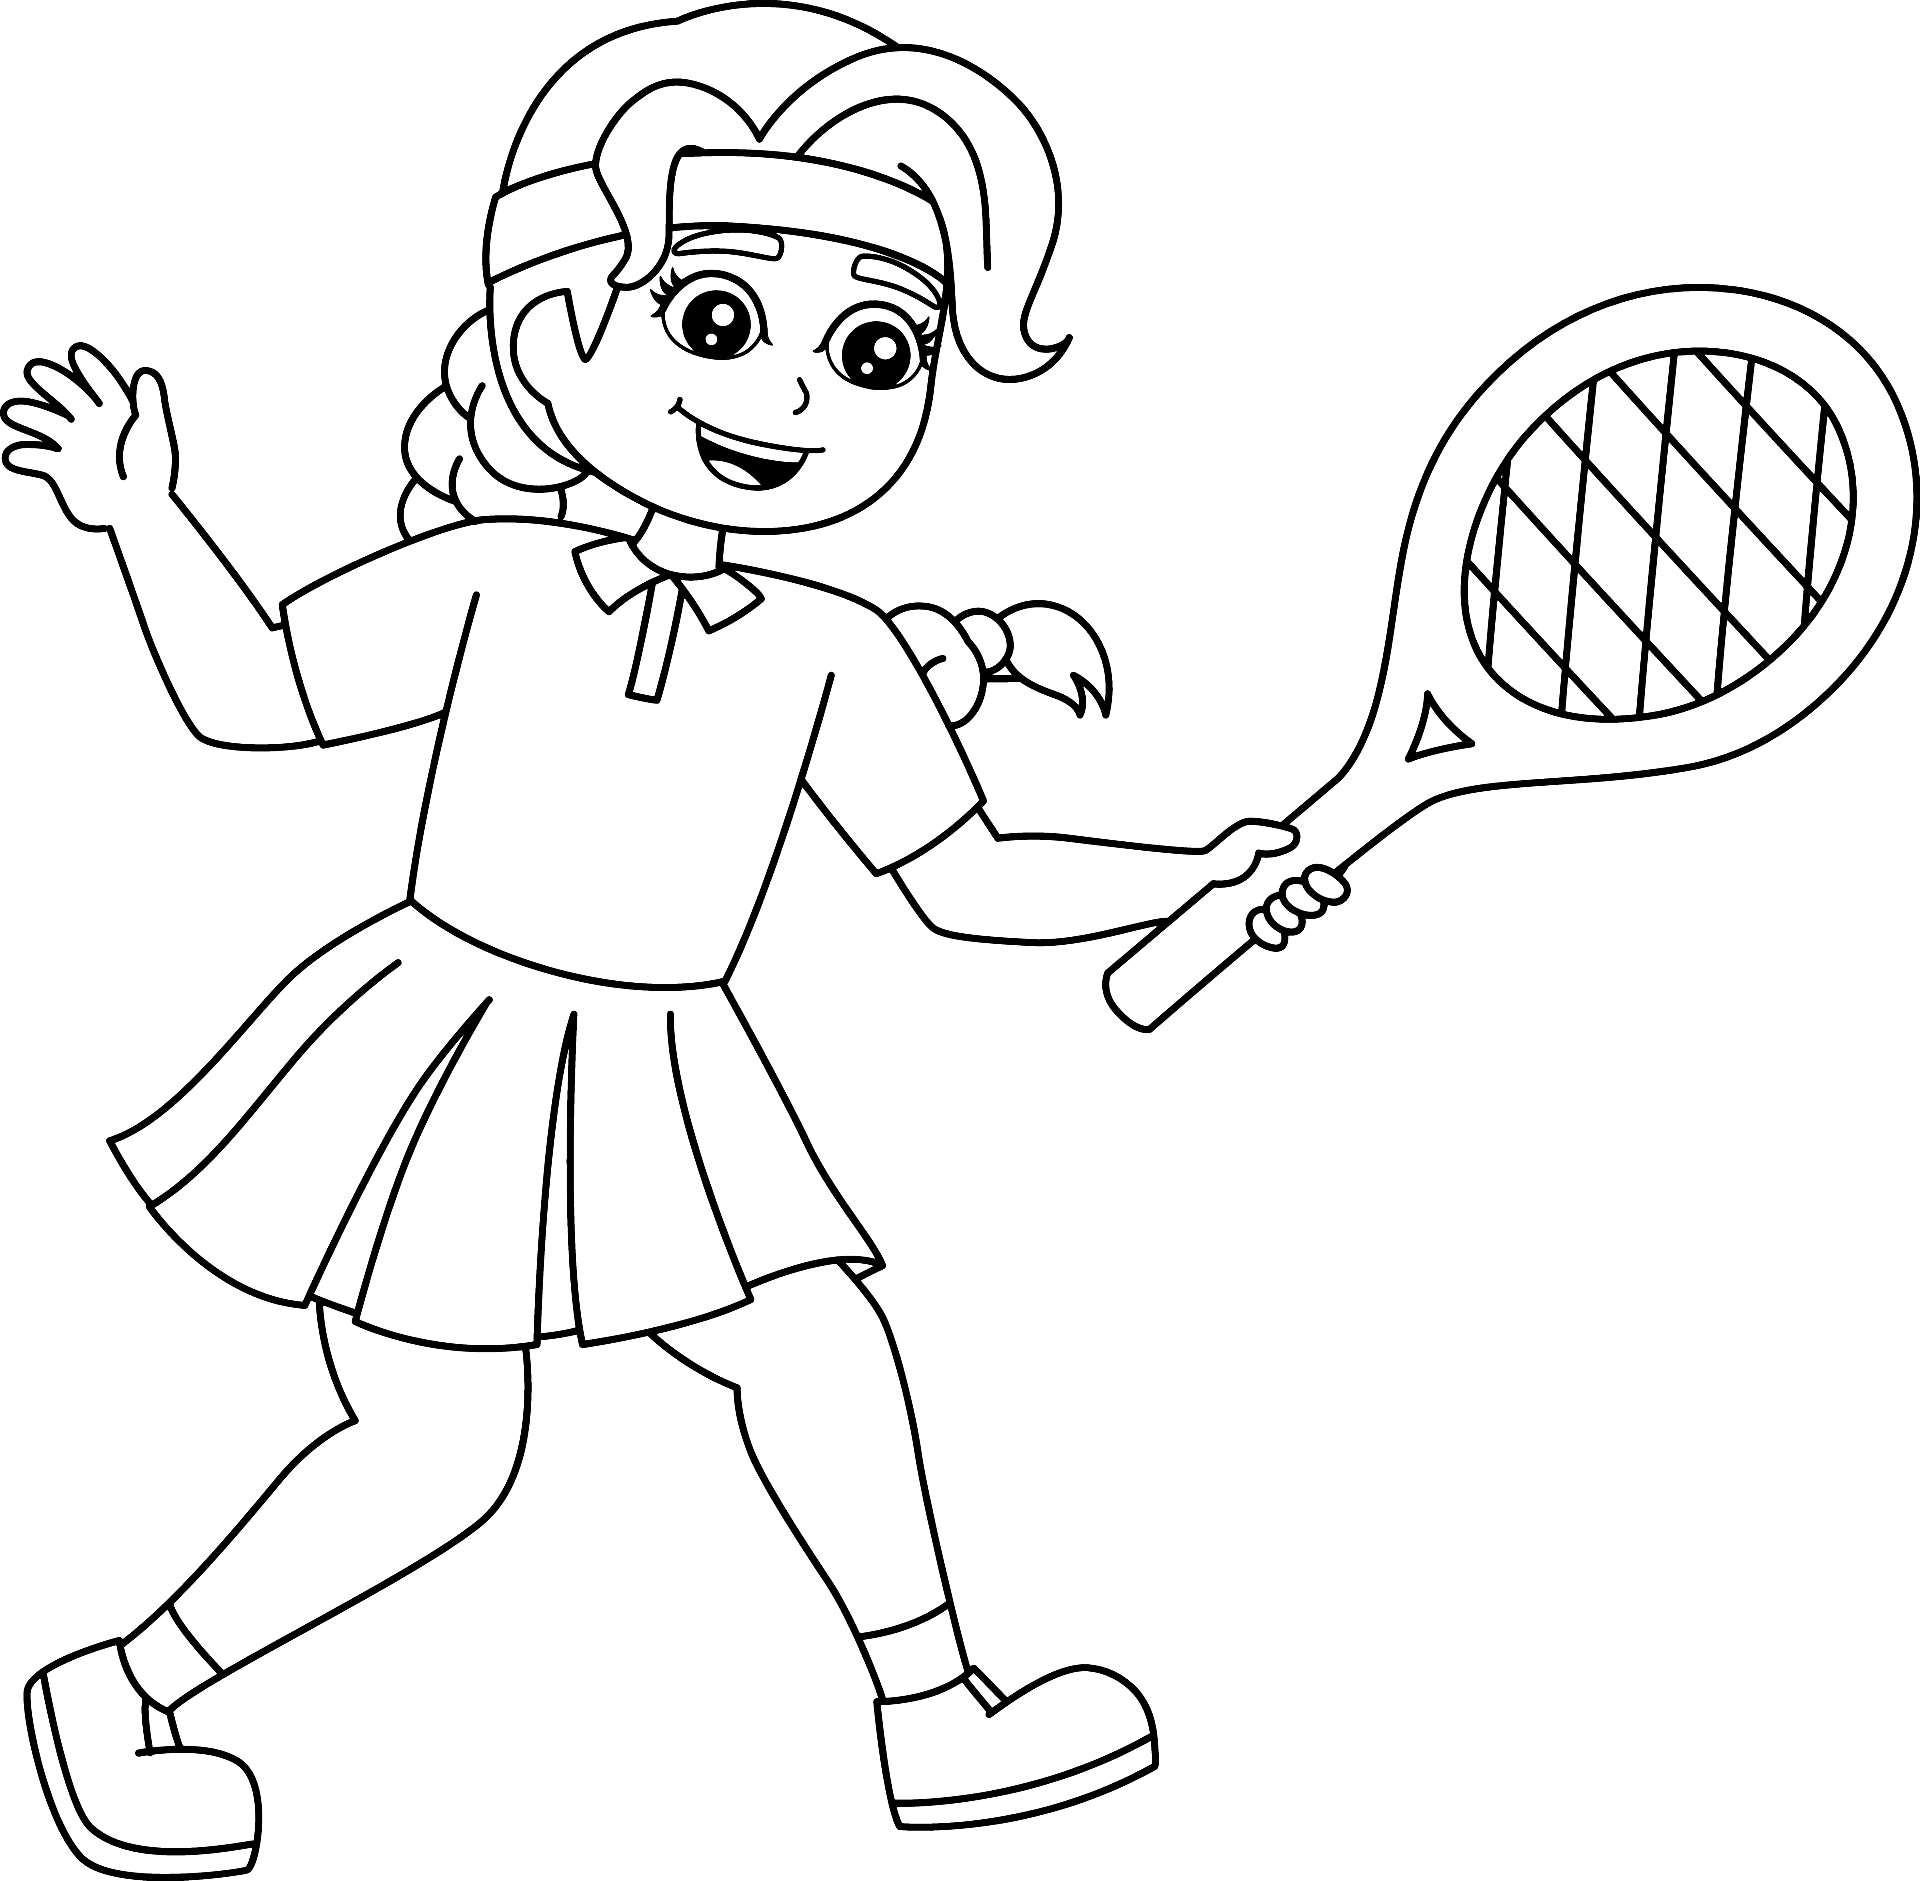 Menina jogando tênis para colorir